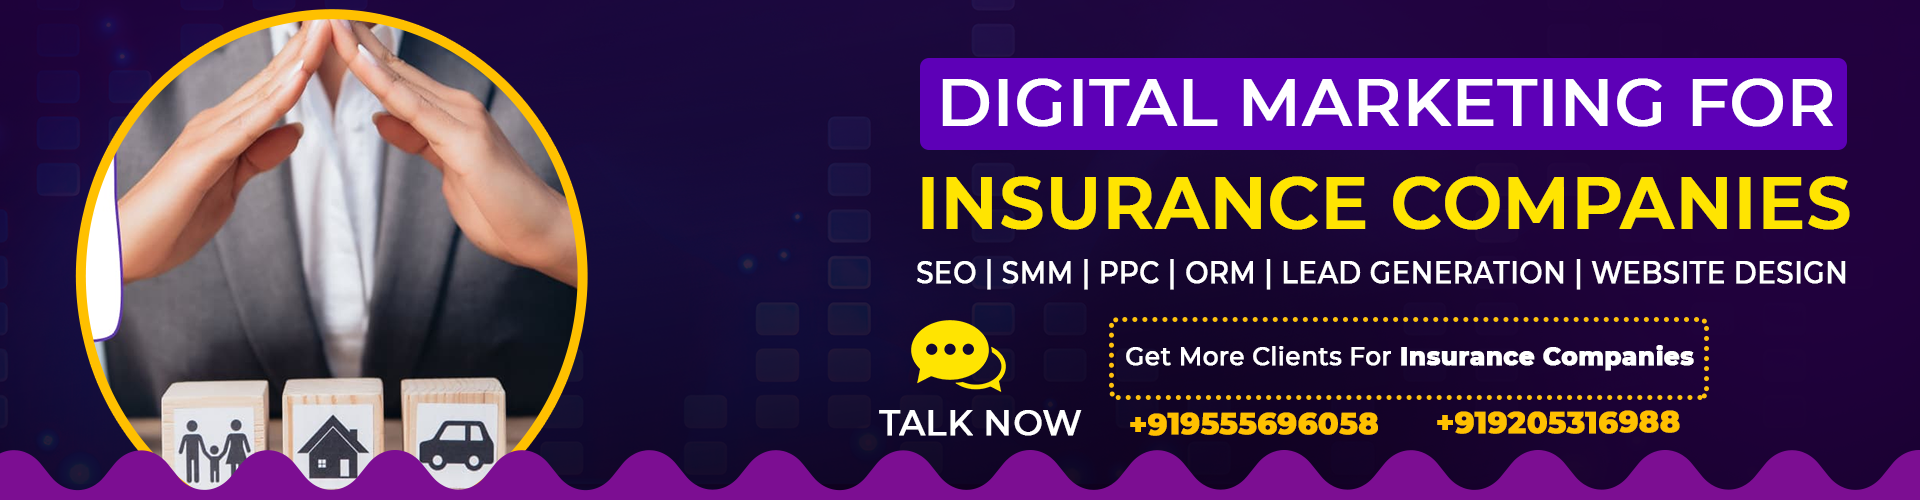 digital-marketing-for-insurance-companies